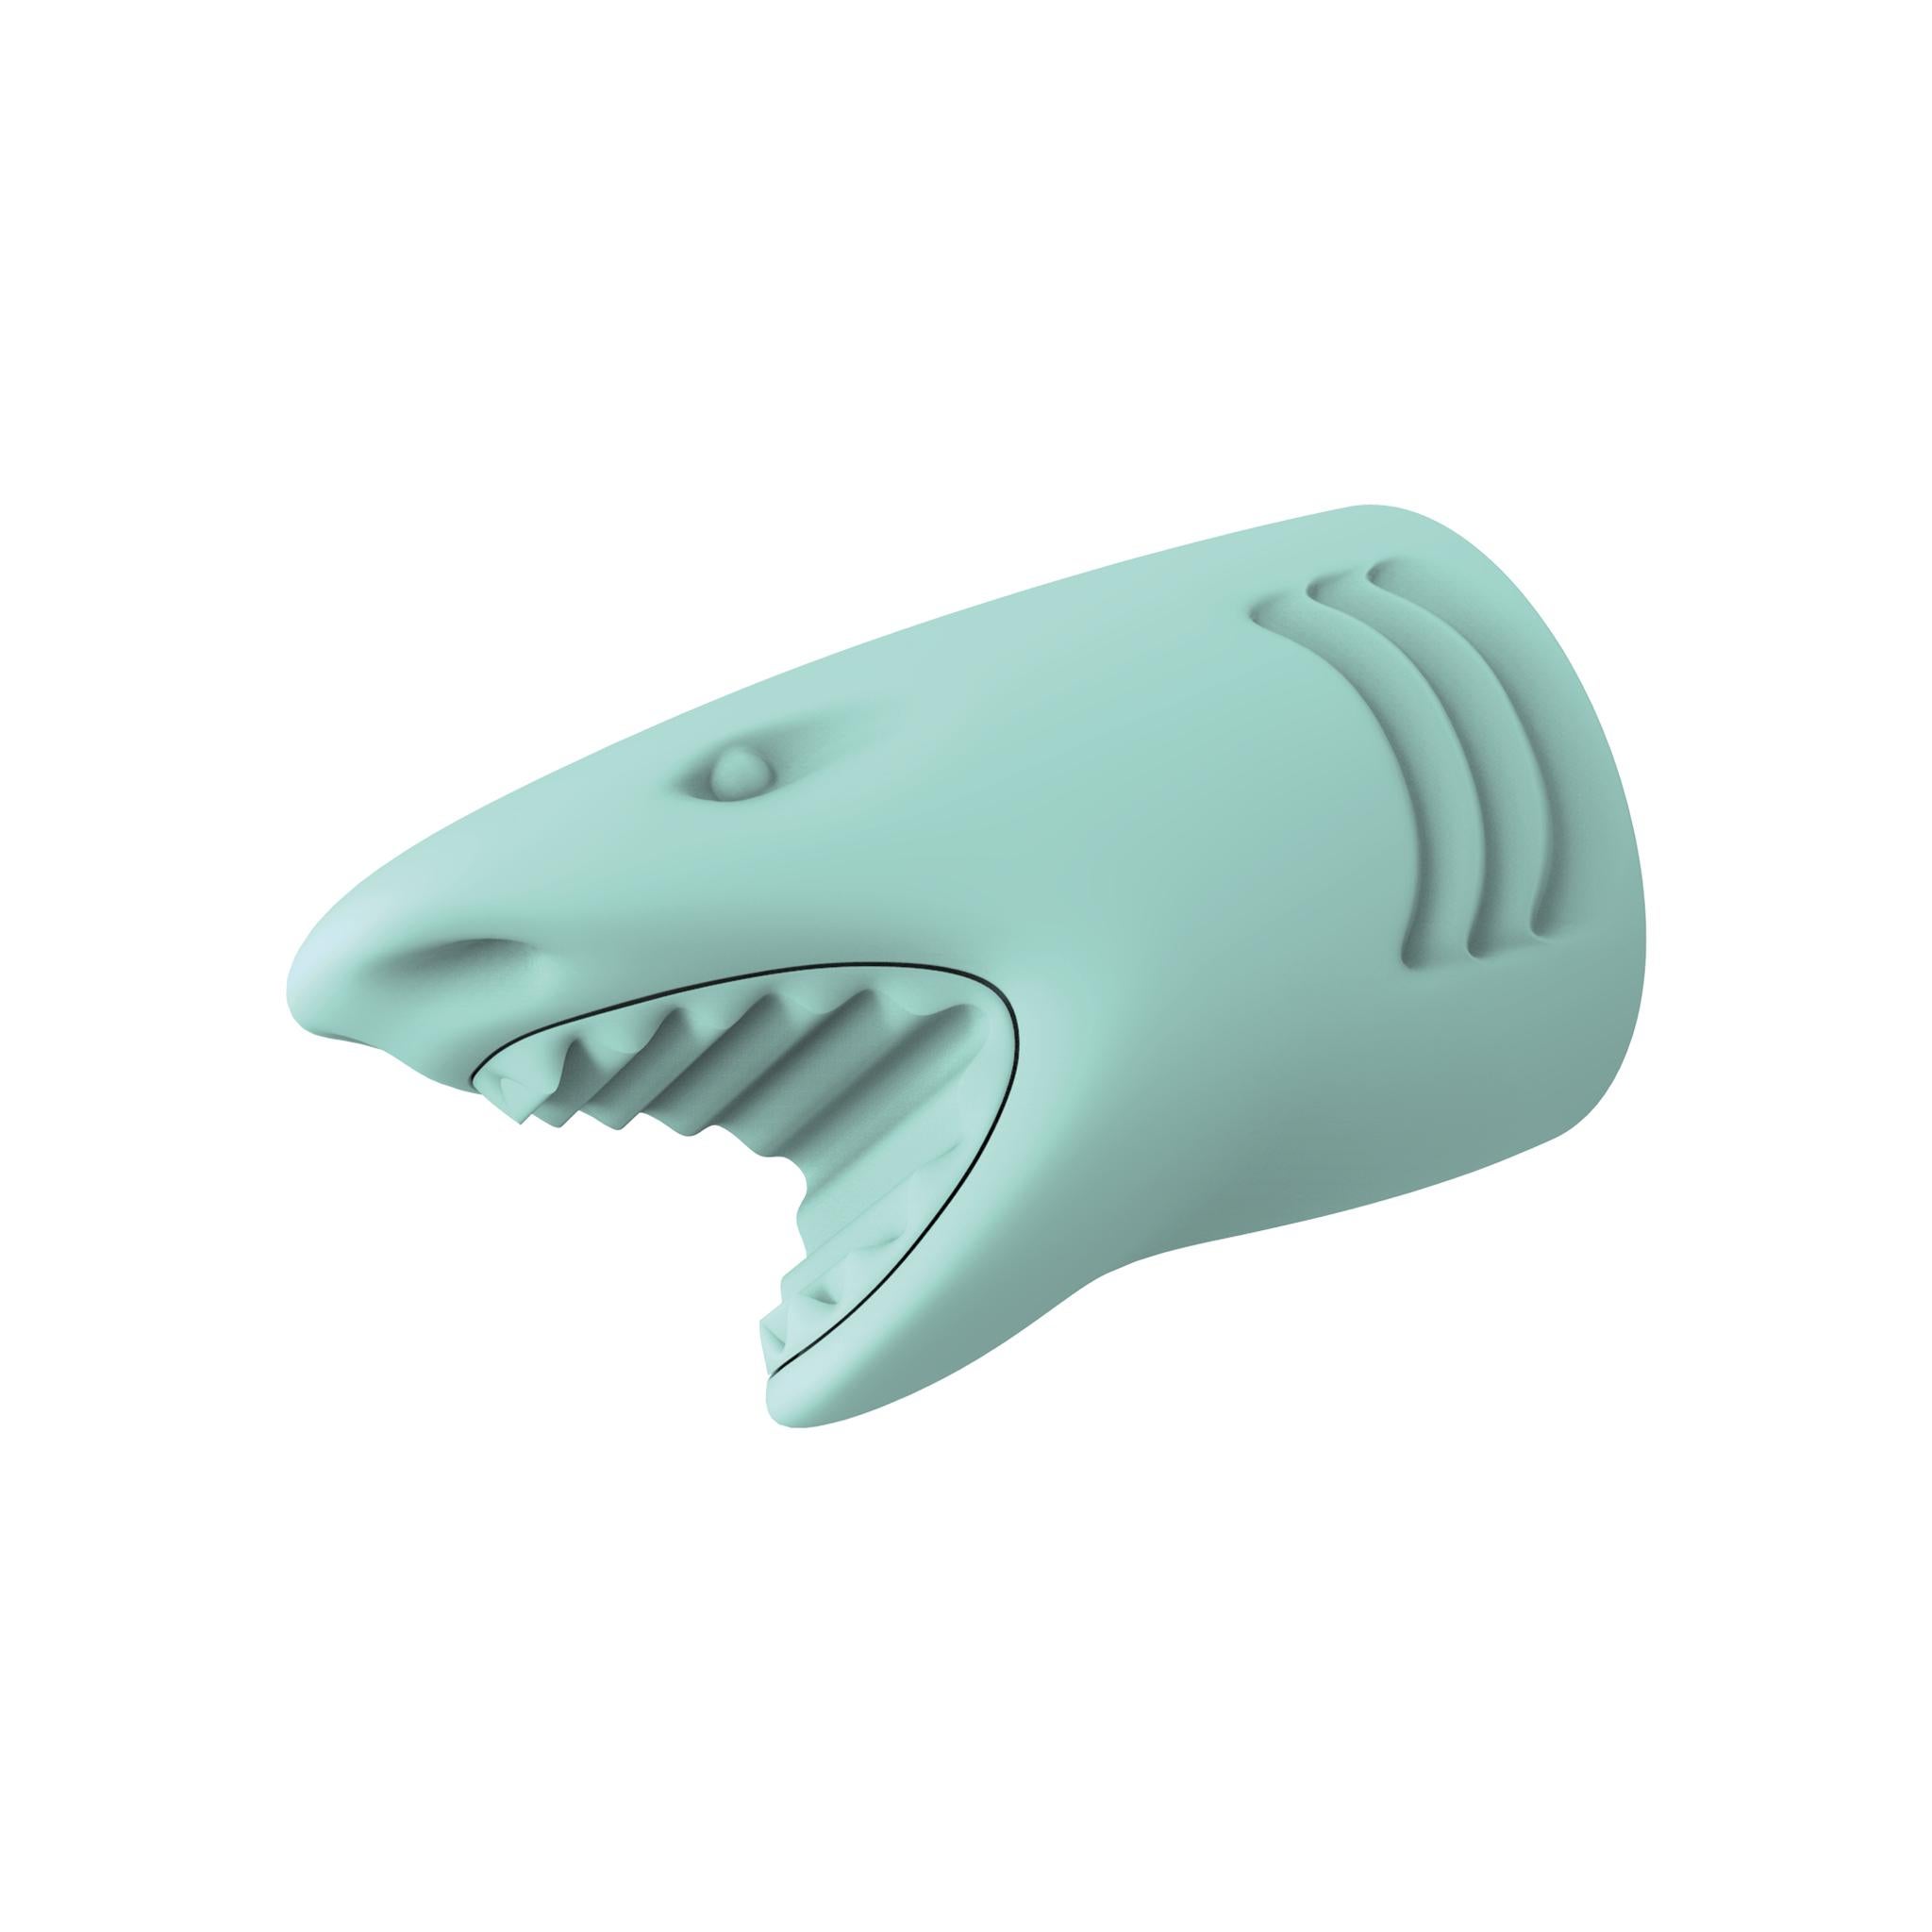 Modern In Stock in Los Angeles, Light Blue Killer Shark Mini Portable Charger